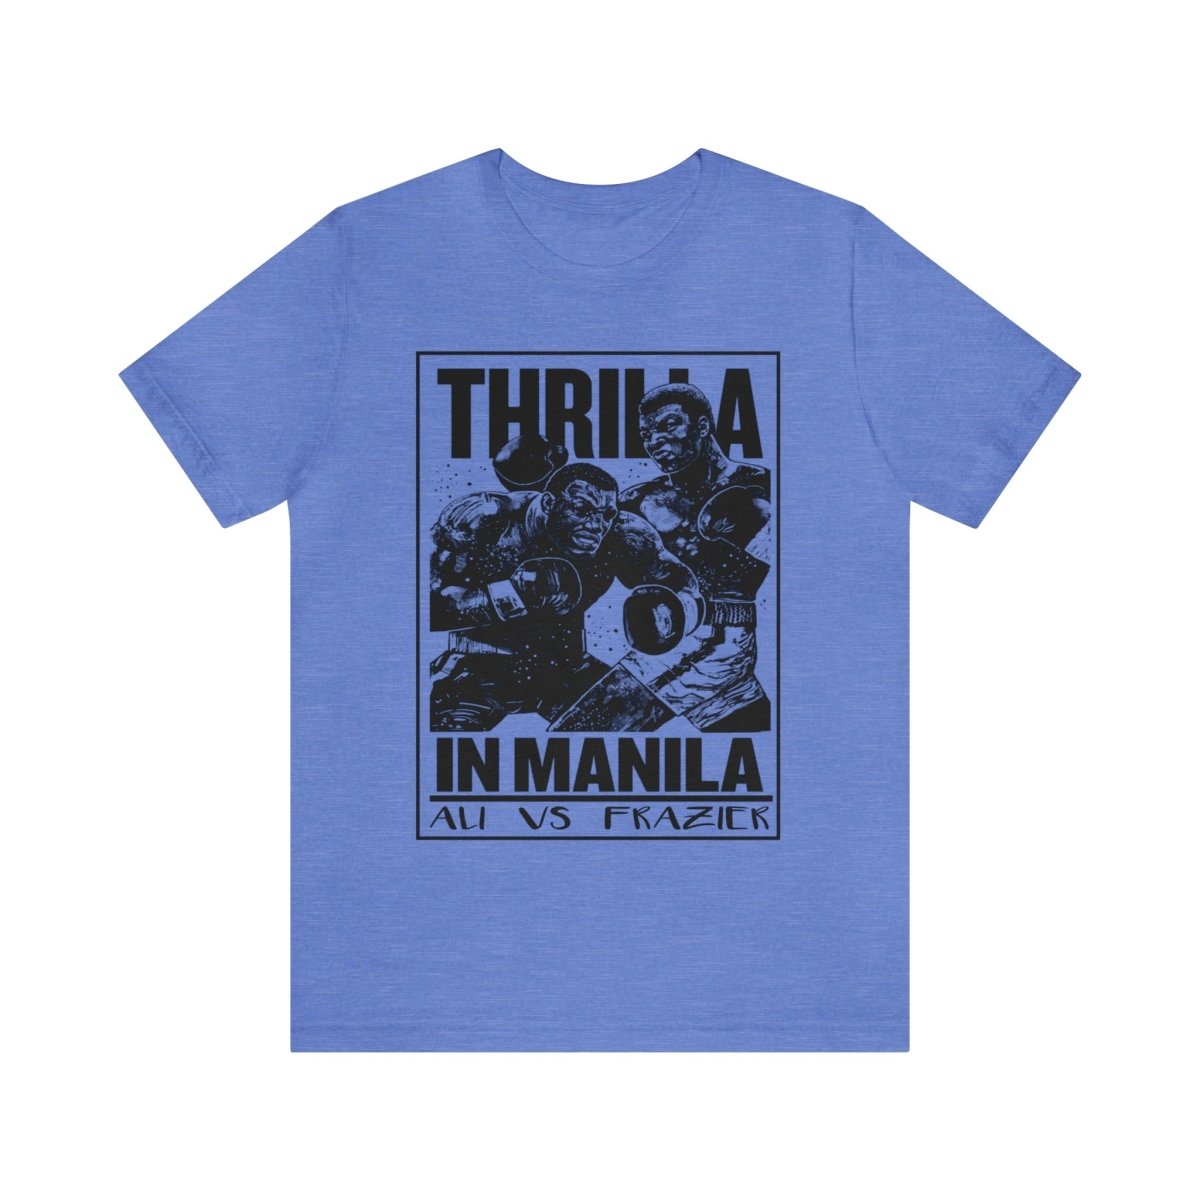 Thrilla in Manila Shirt - The Trini Gee